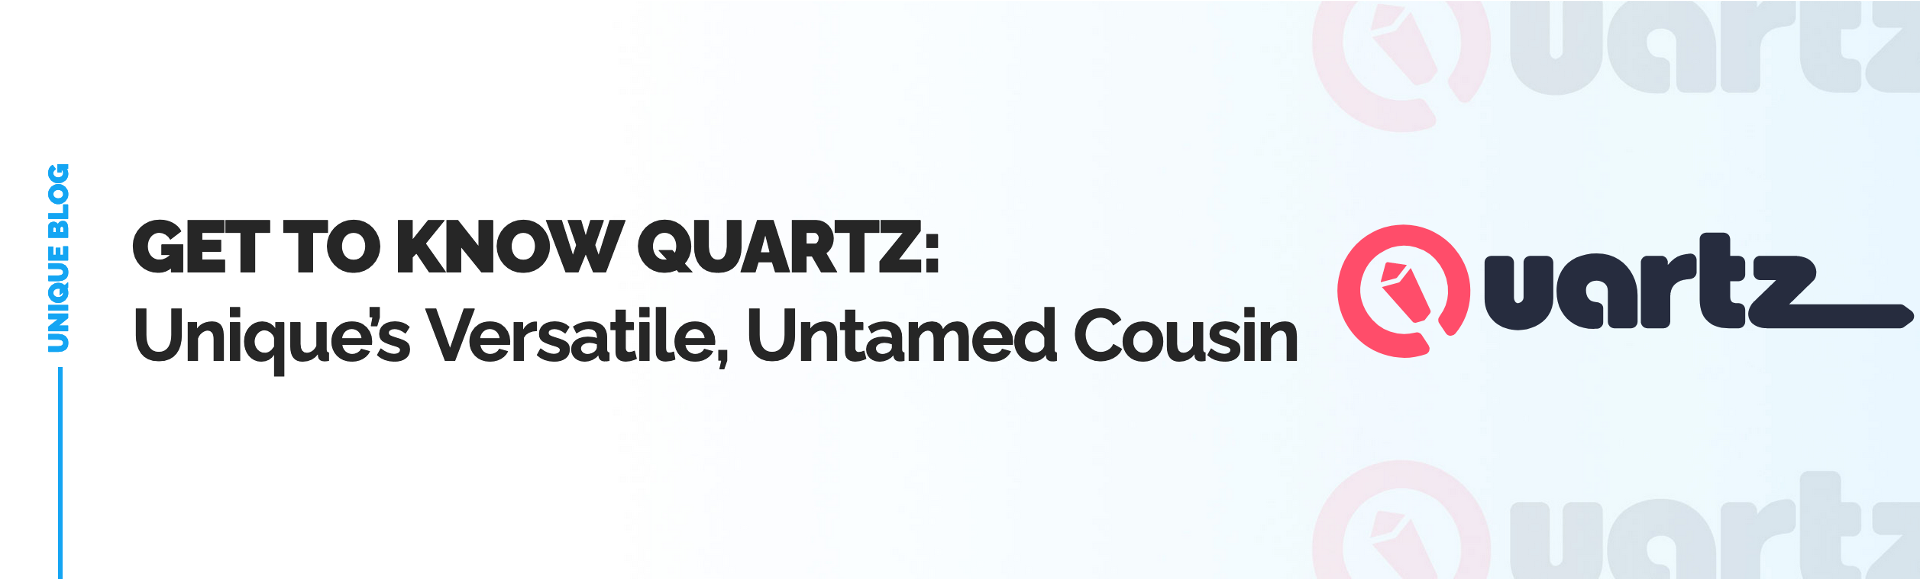  Get to Know Quartz: Unique’s Versatile, Untamed Cousin